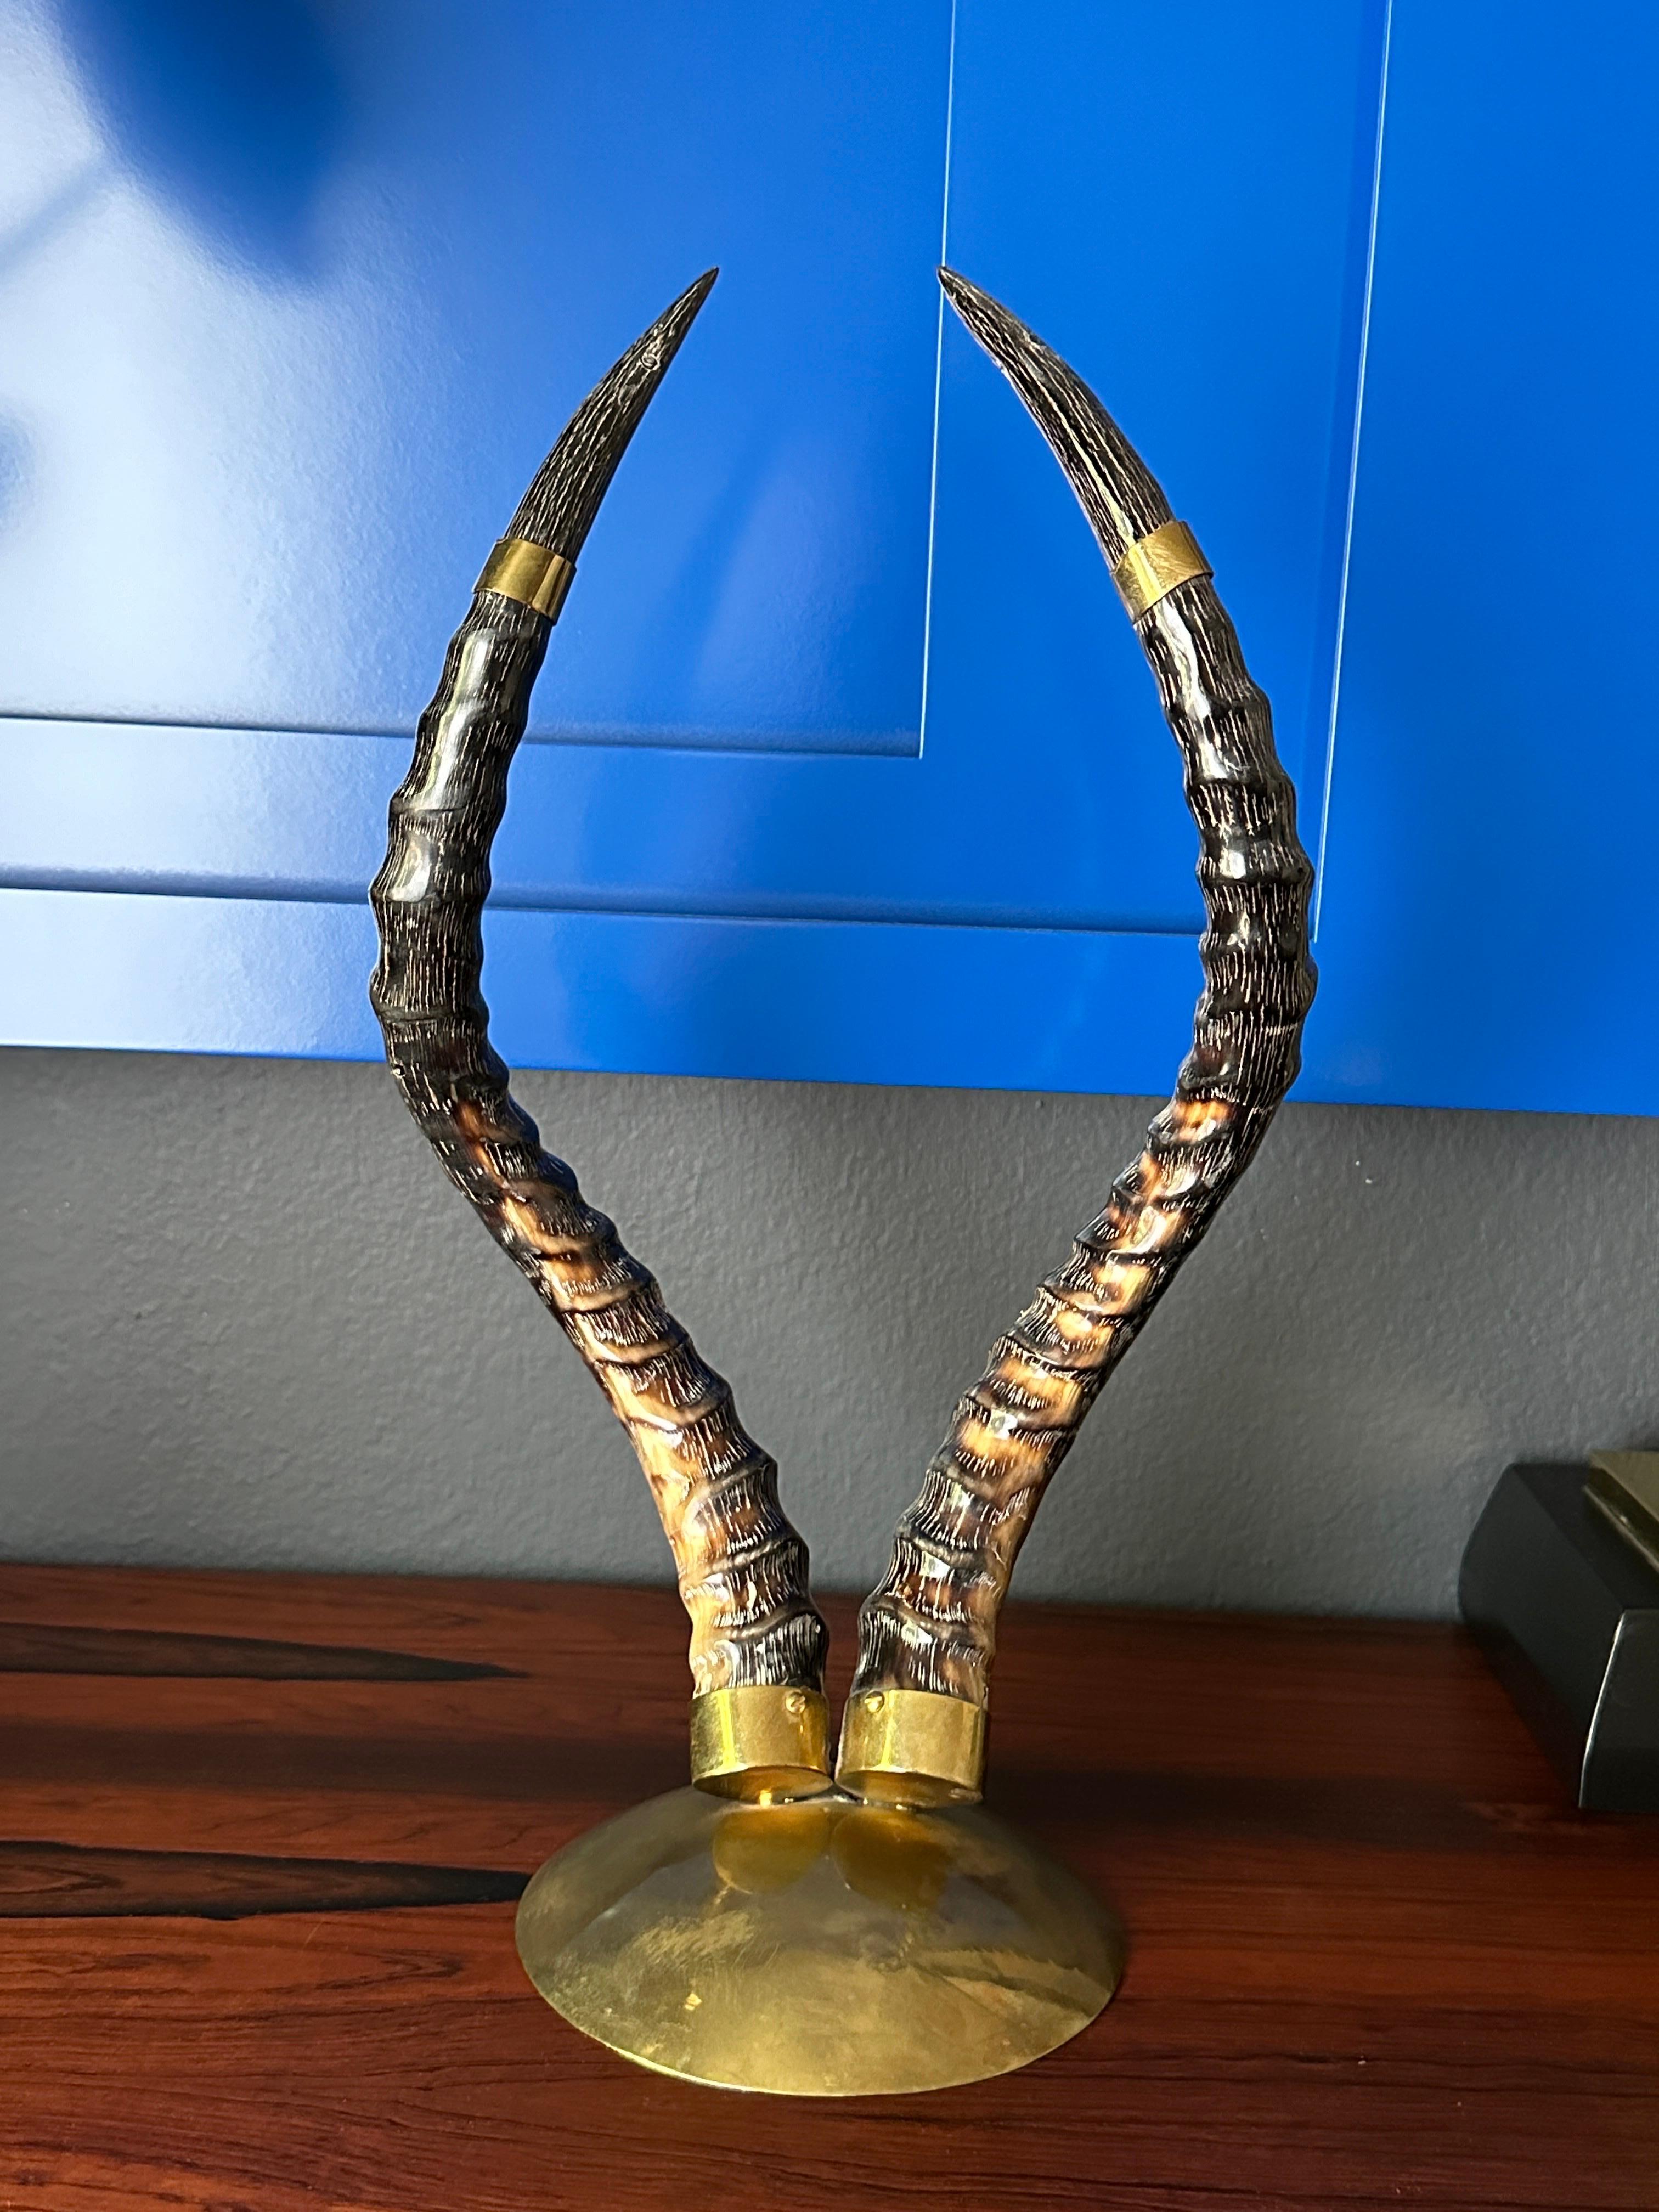 Polished antelope horns mounted on brass base.